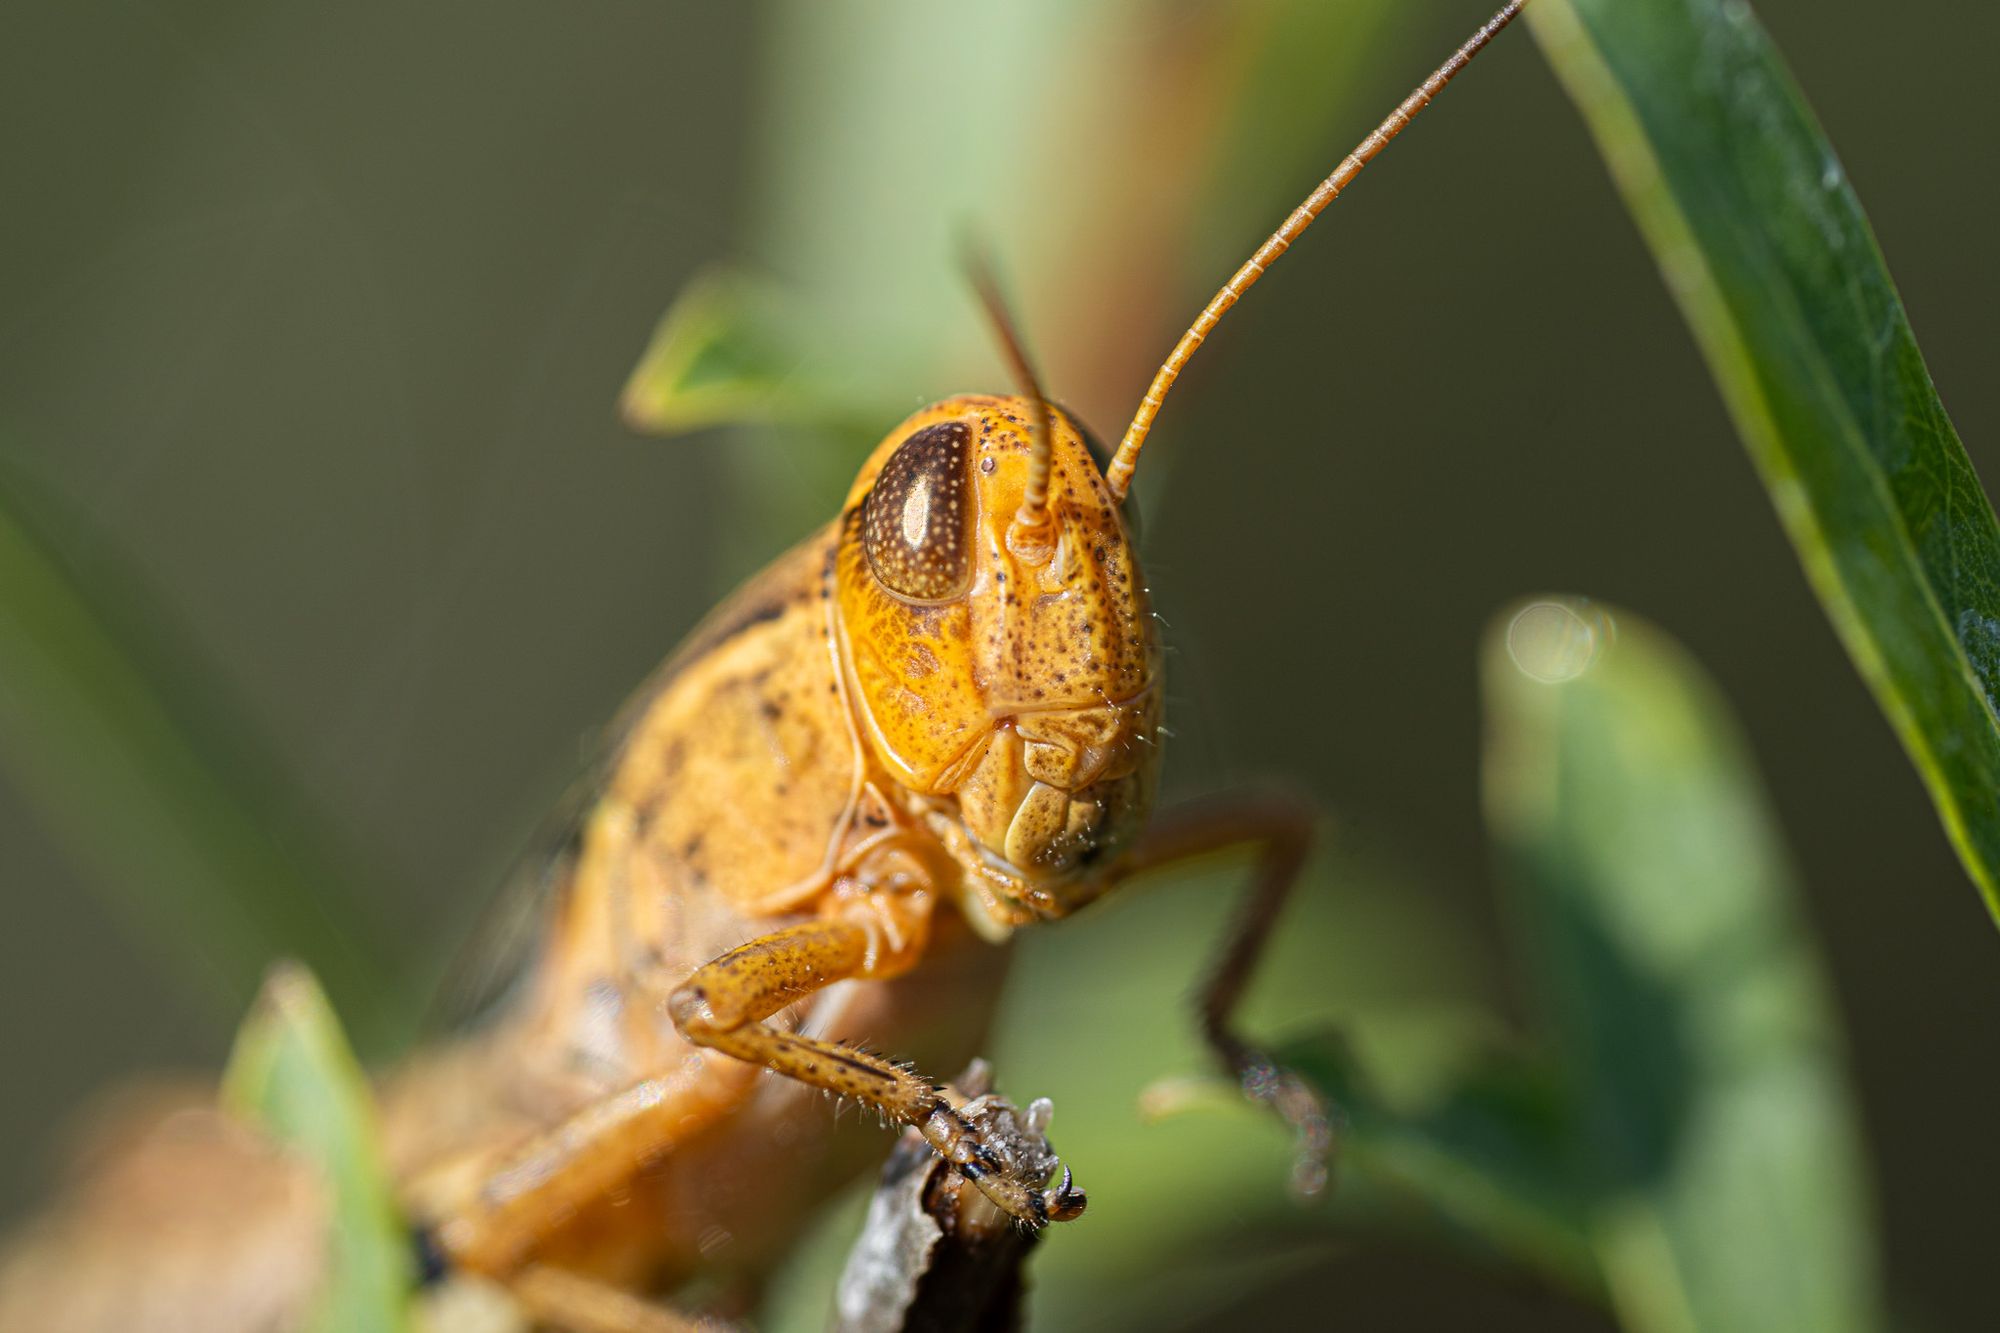 grasshopper face